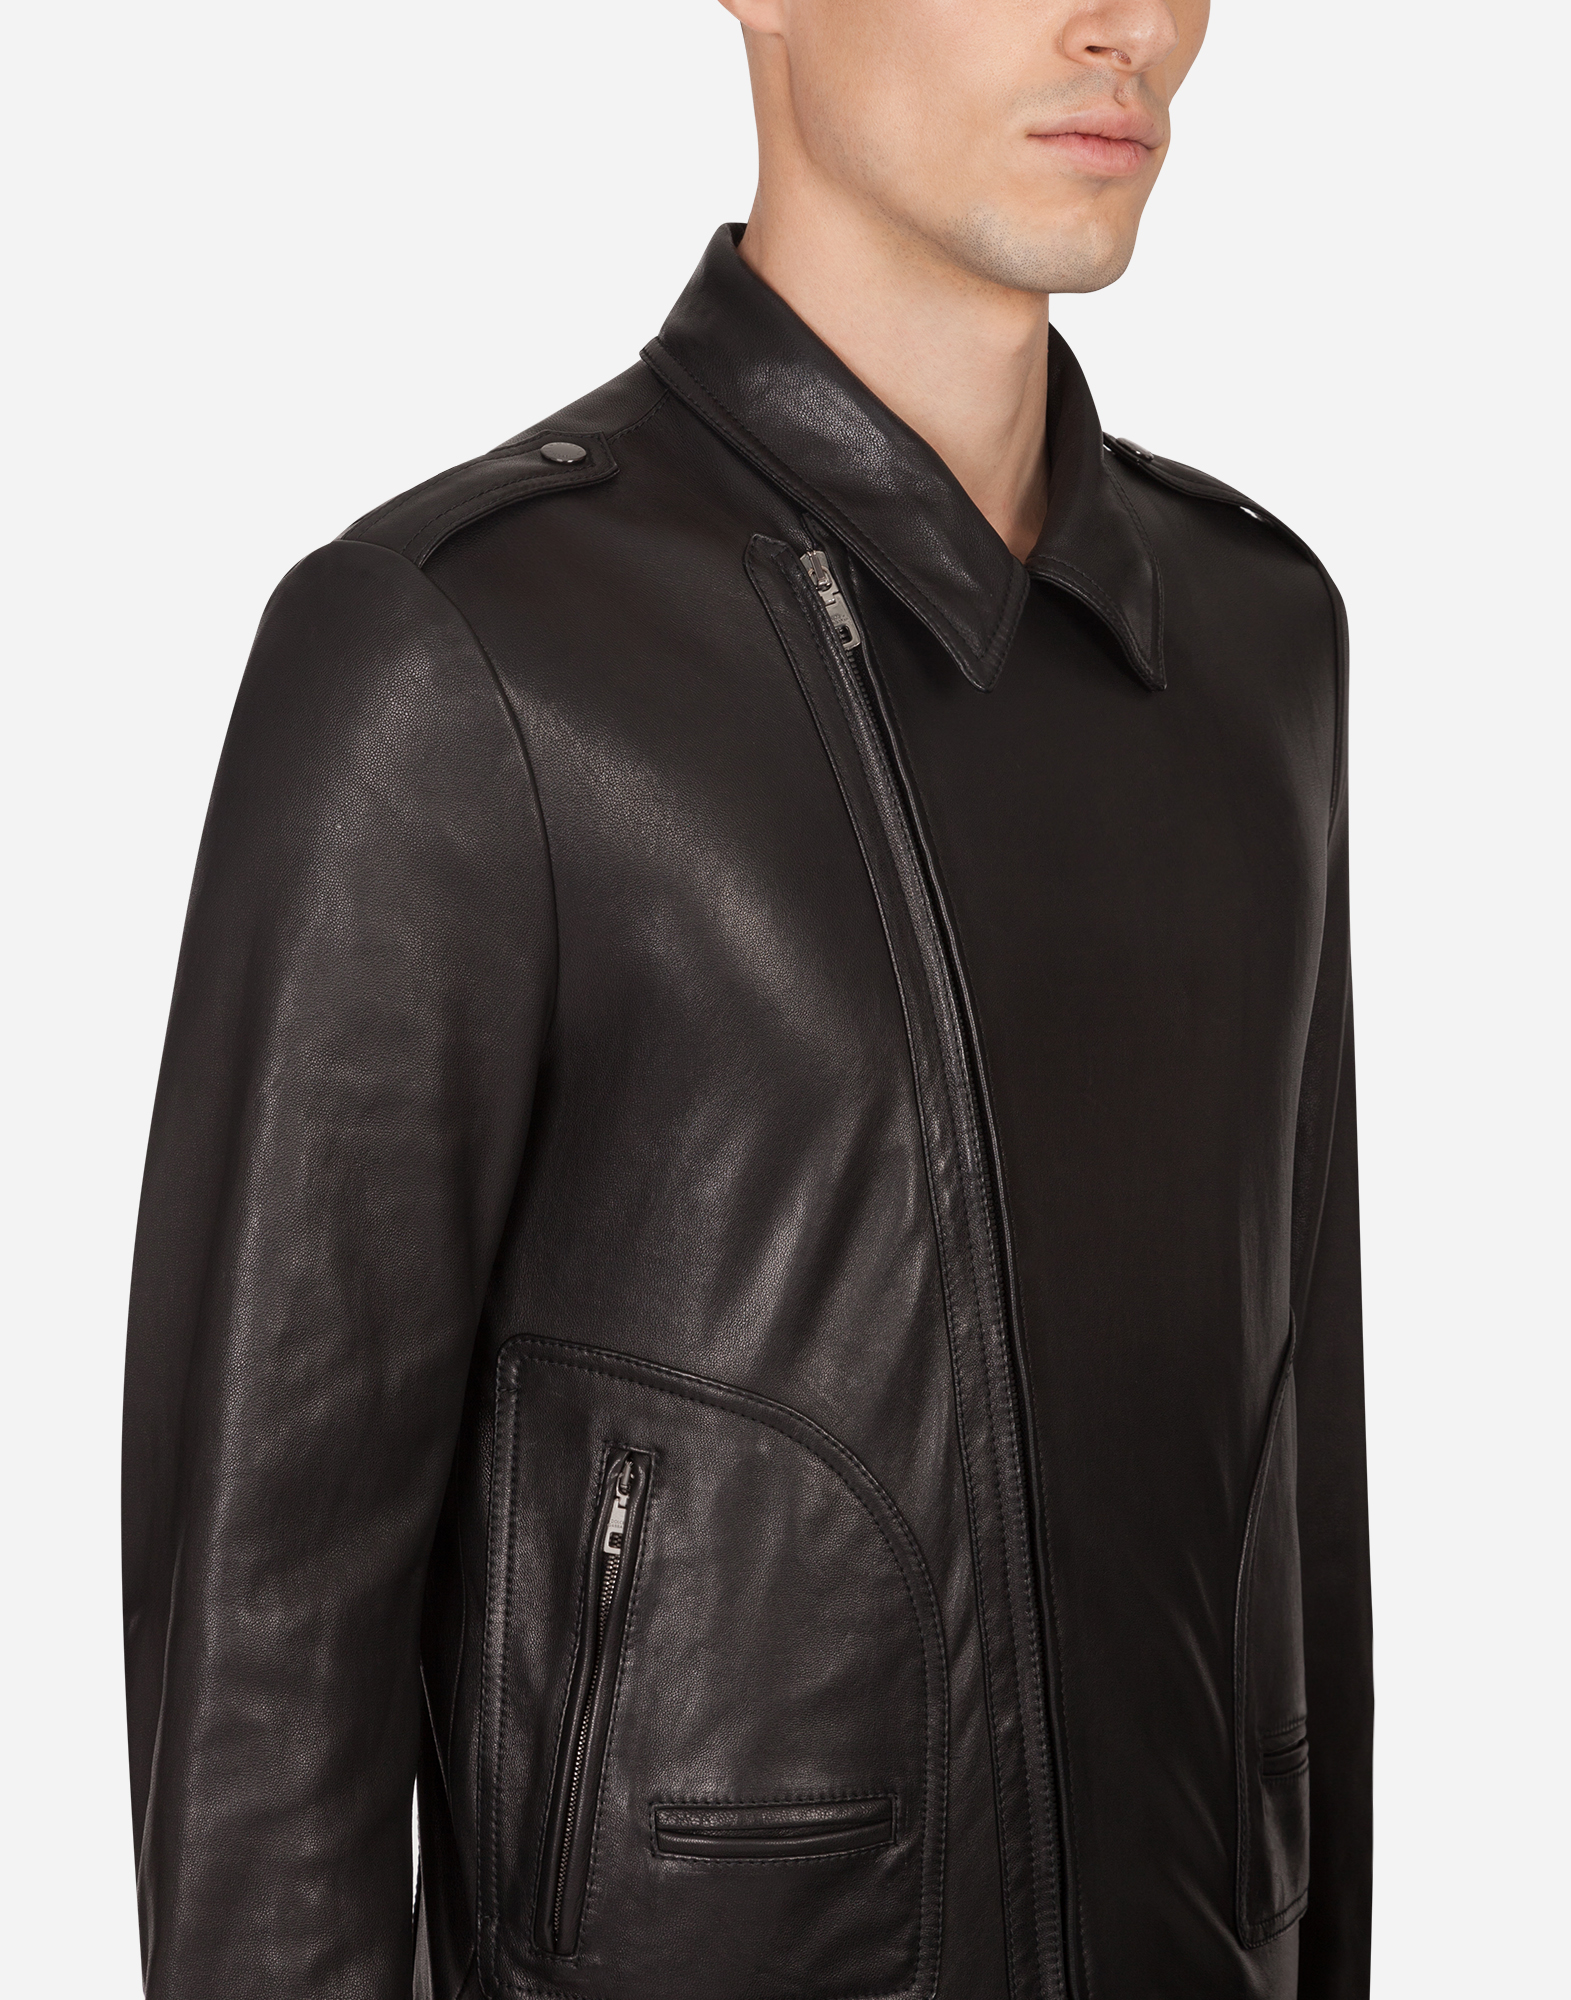 dolce gabbana leather jacket mens